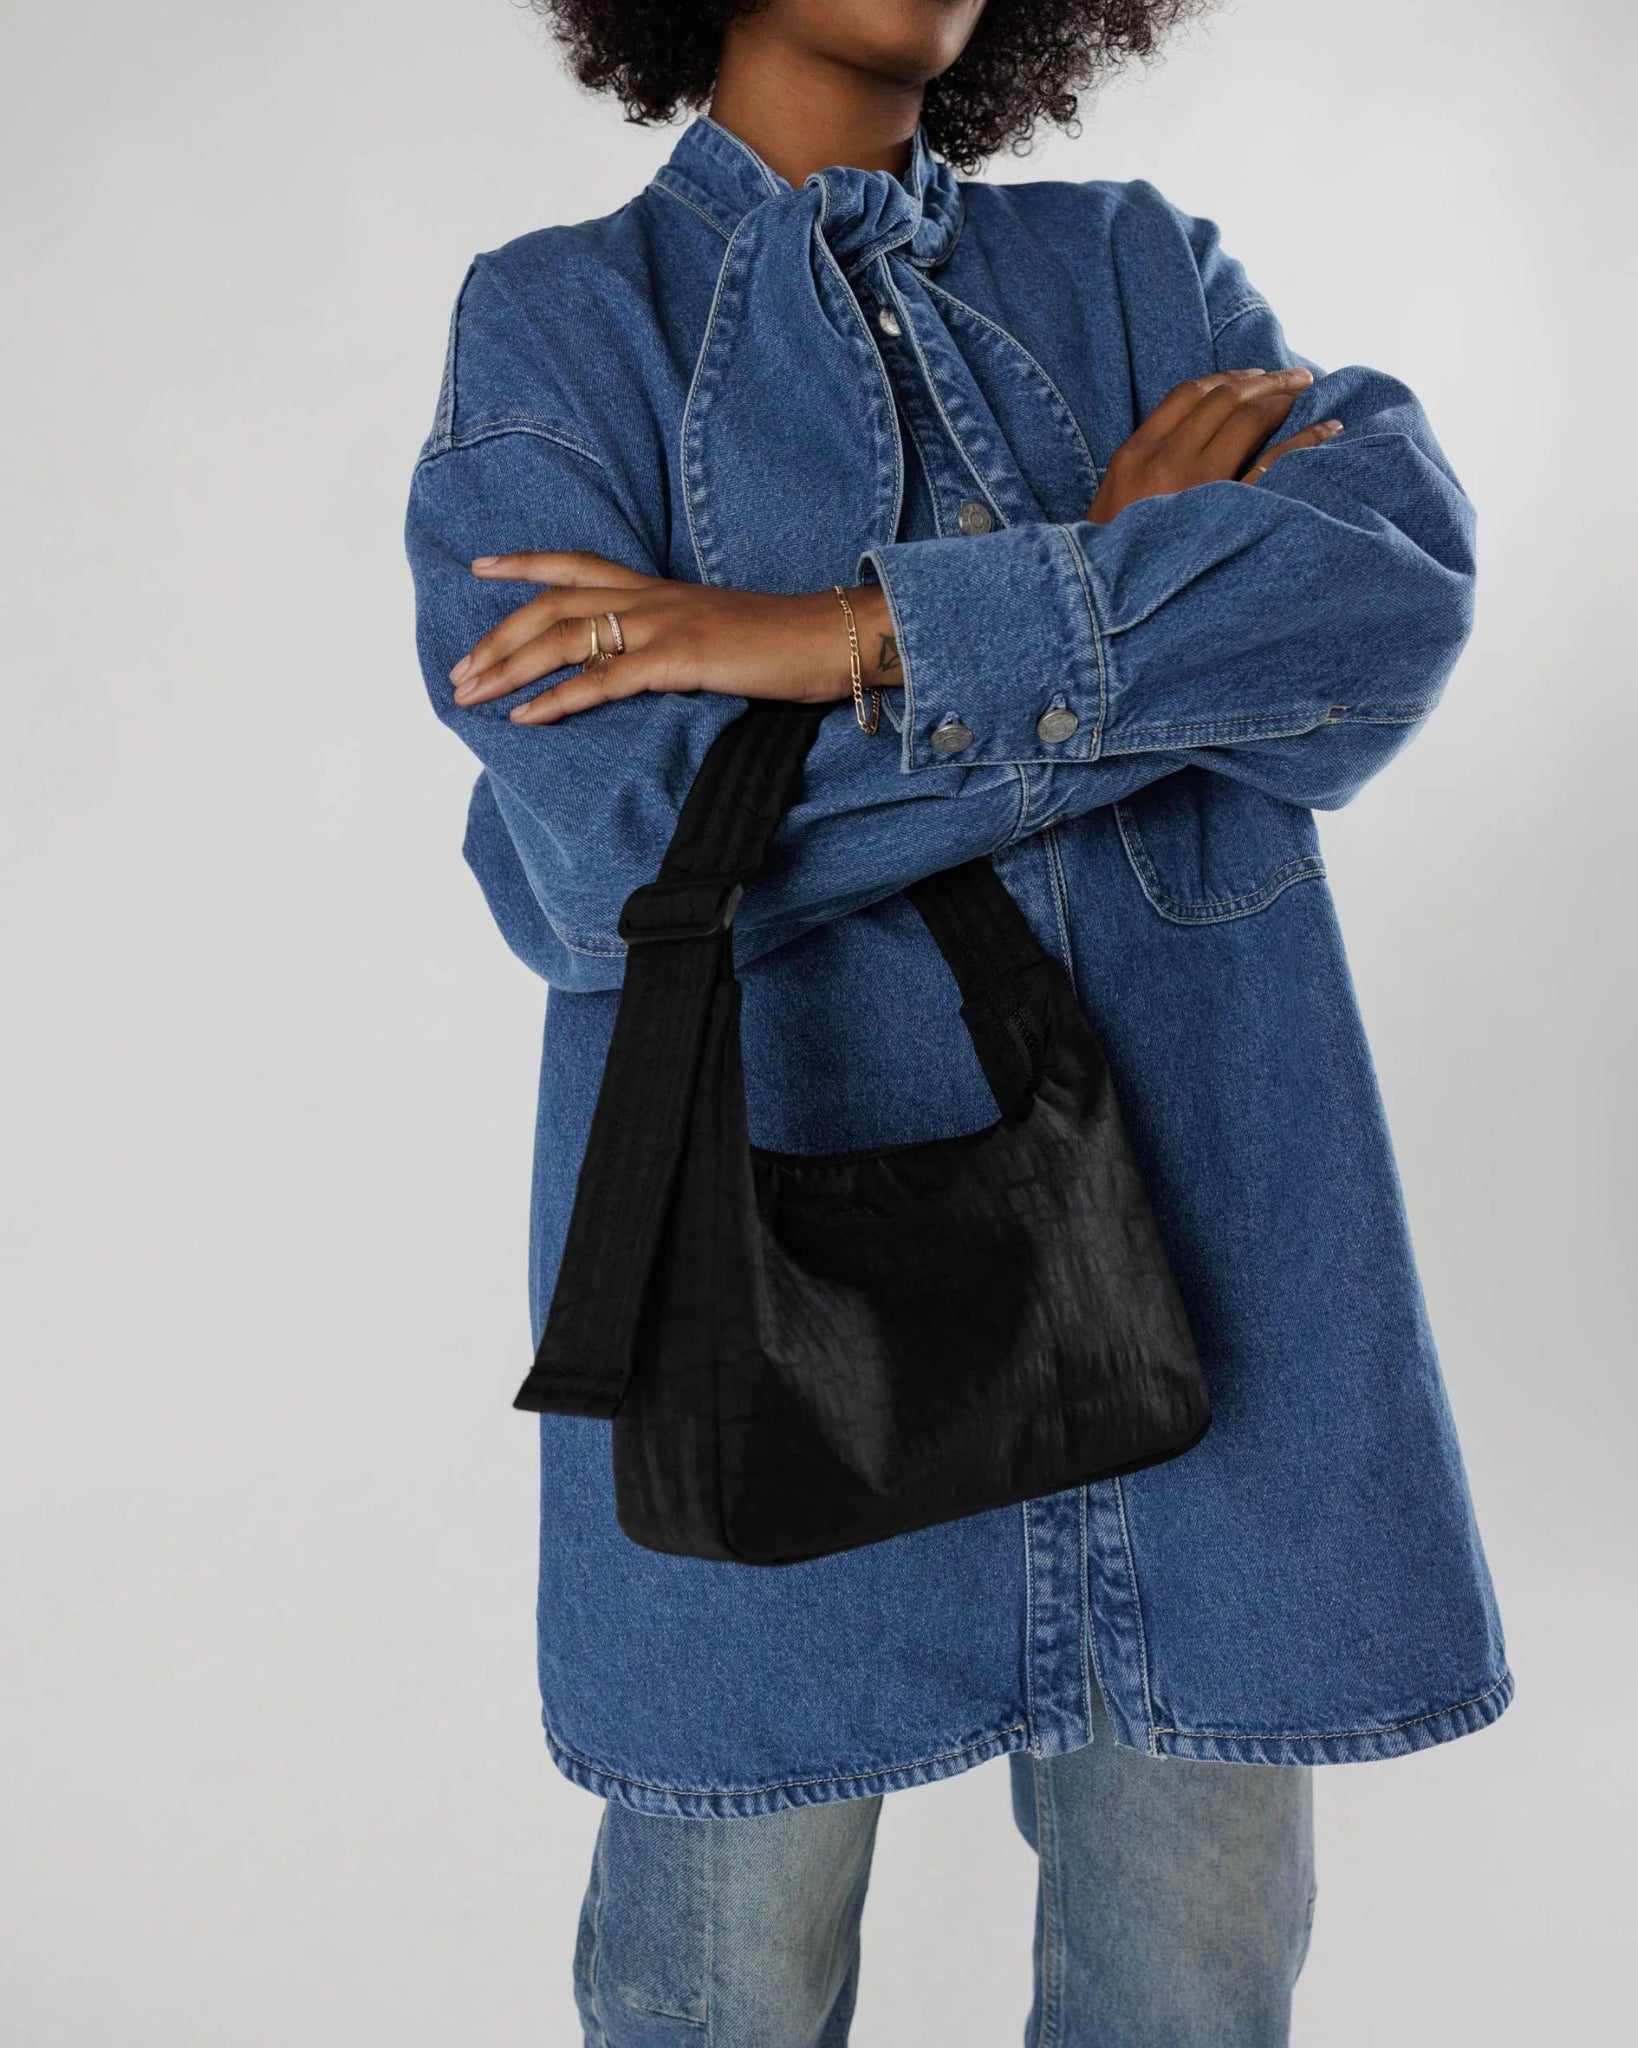 BAGGU Mini Nylon shoulder bag - Black - Preston Apothecary